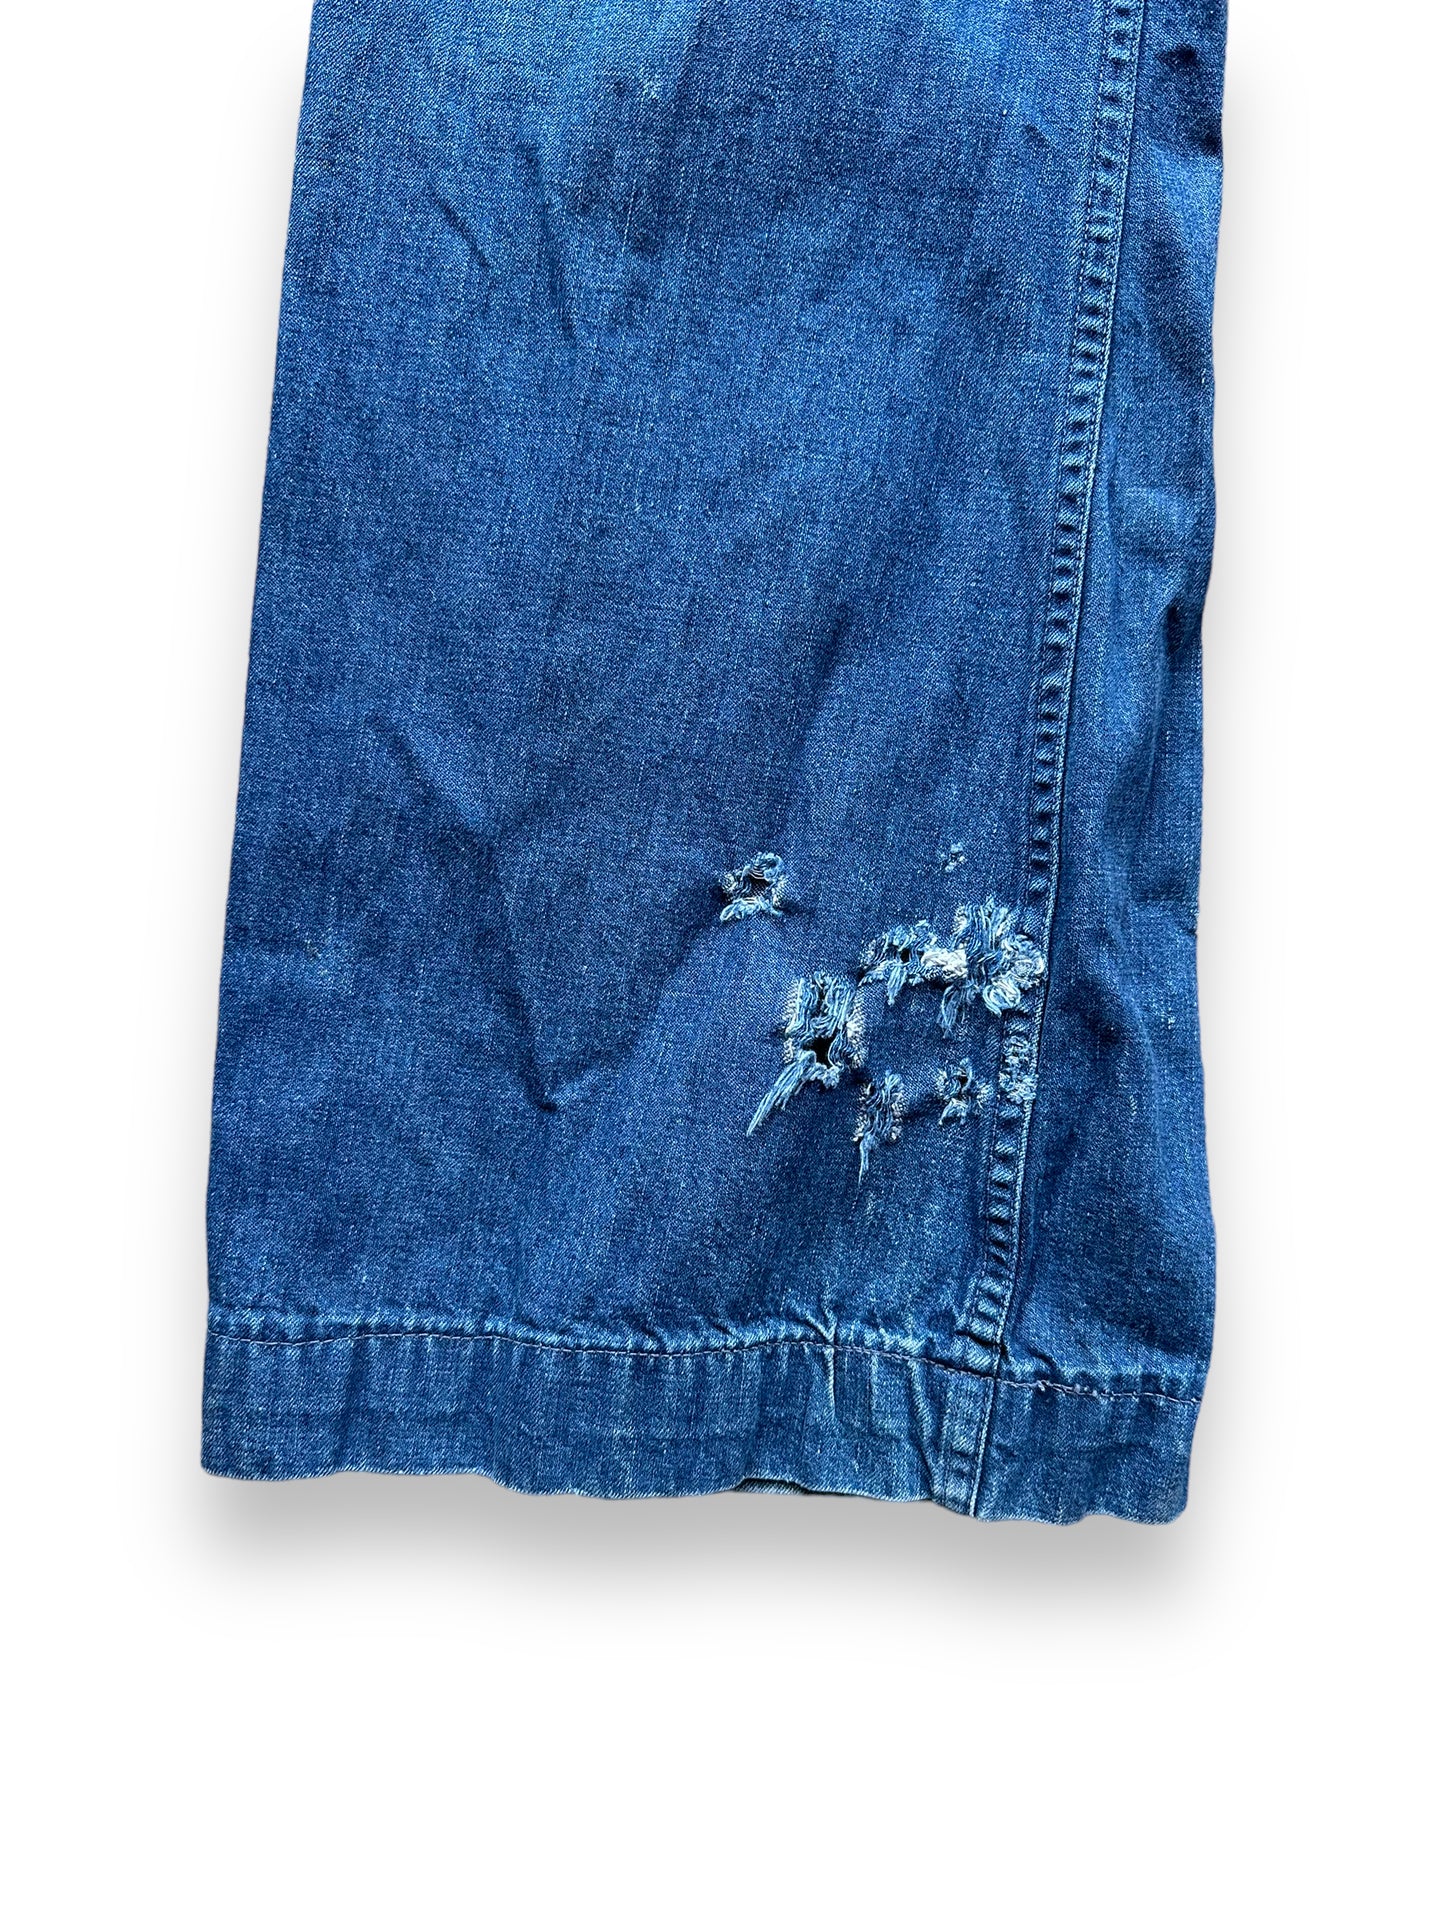 Lower Right Cuff Damage on Vintage 70s Era Sailor Denim with Repairs W36 | Vintage Denim Swabbie Pants Seattle | Barn Owl Vintage Workwear